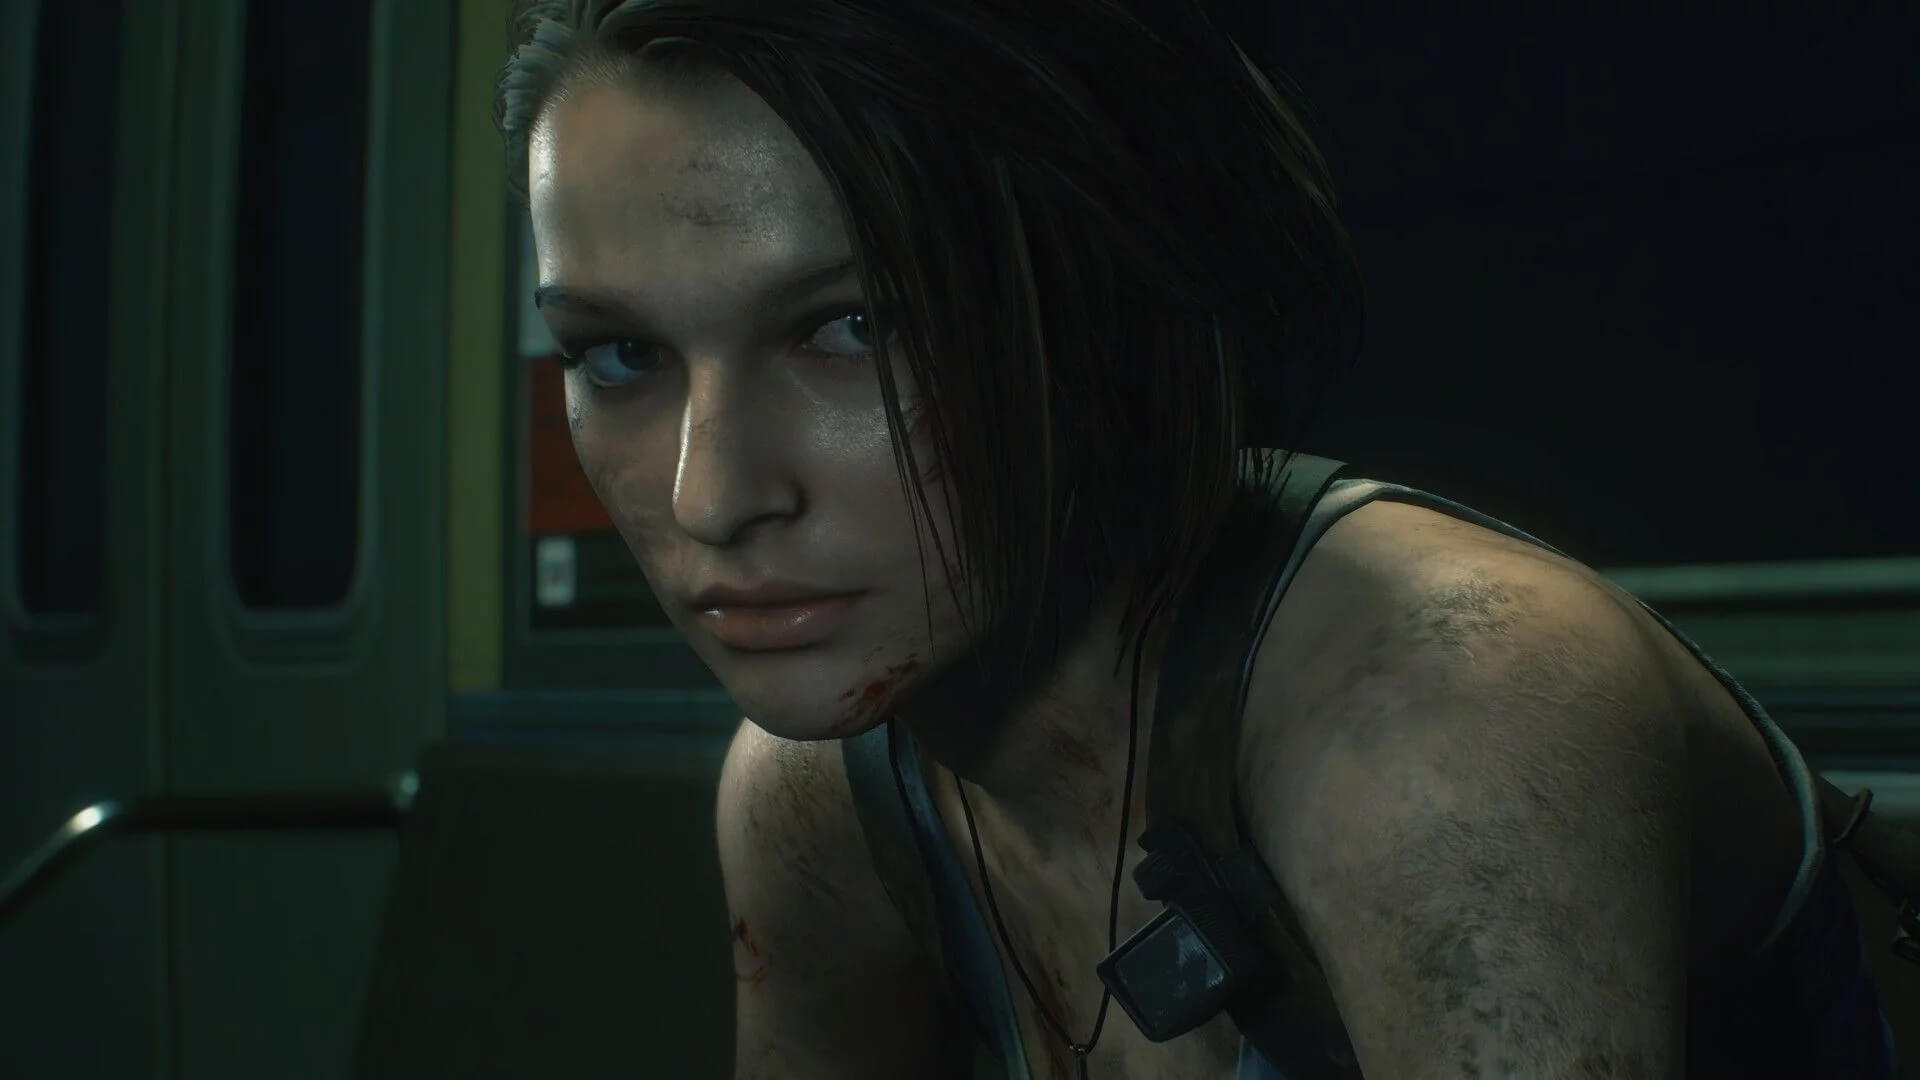 Resident Evil 2 Remake Jill Valentine Mod 